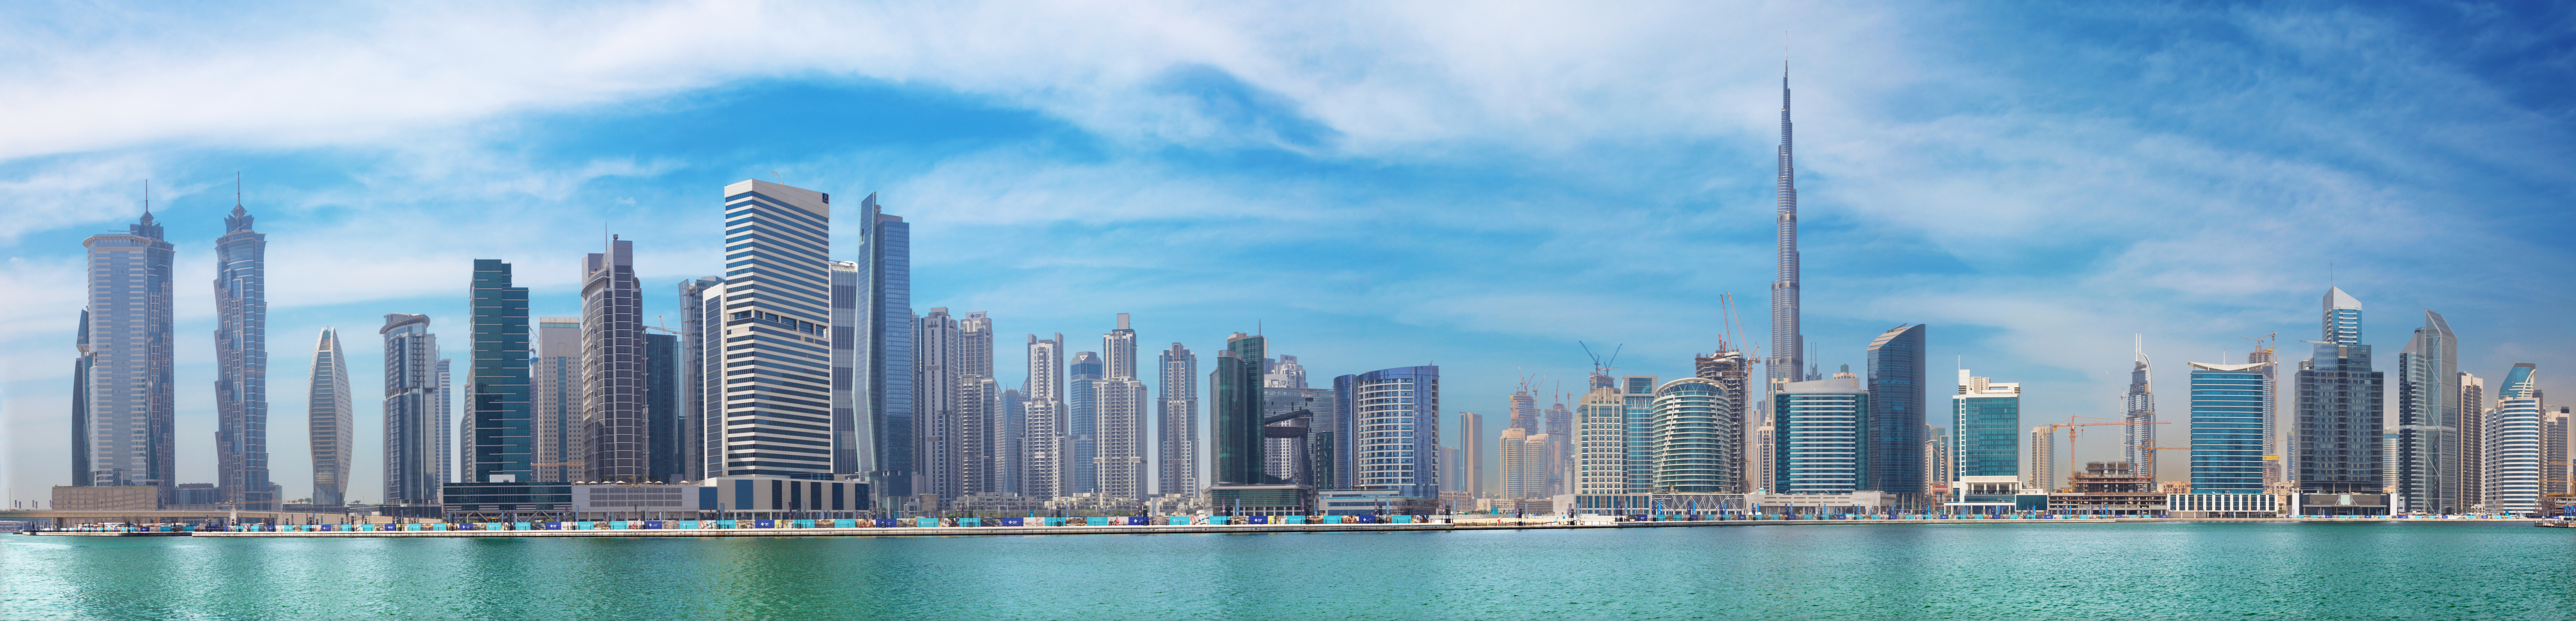 Skyline of Dubai, United Arab Emirates on a clear sunny day